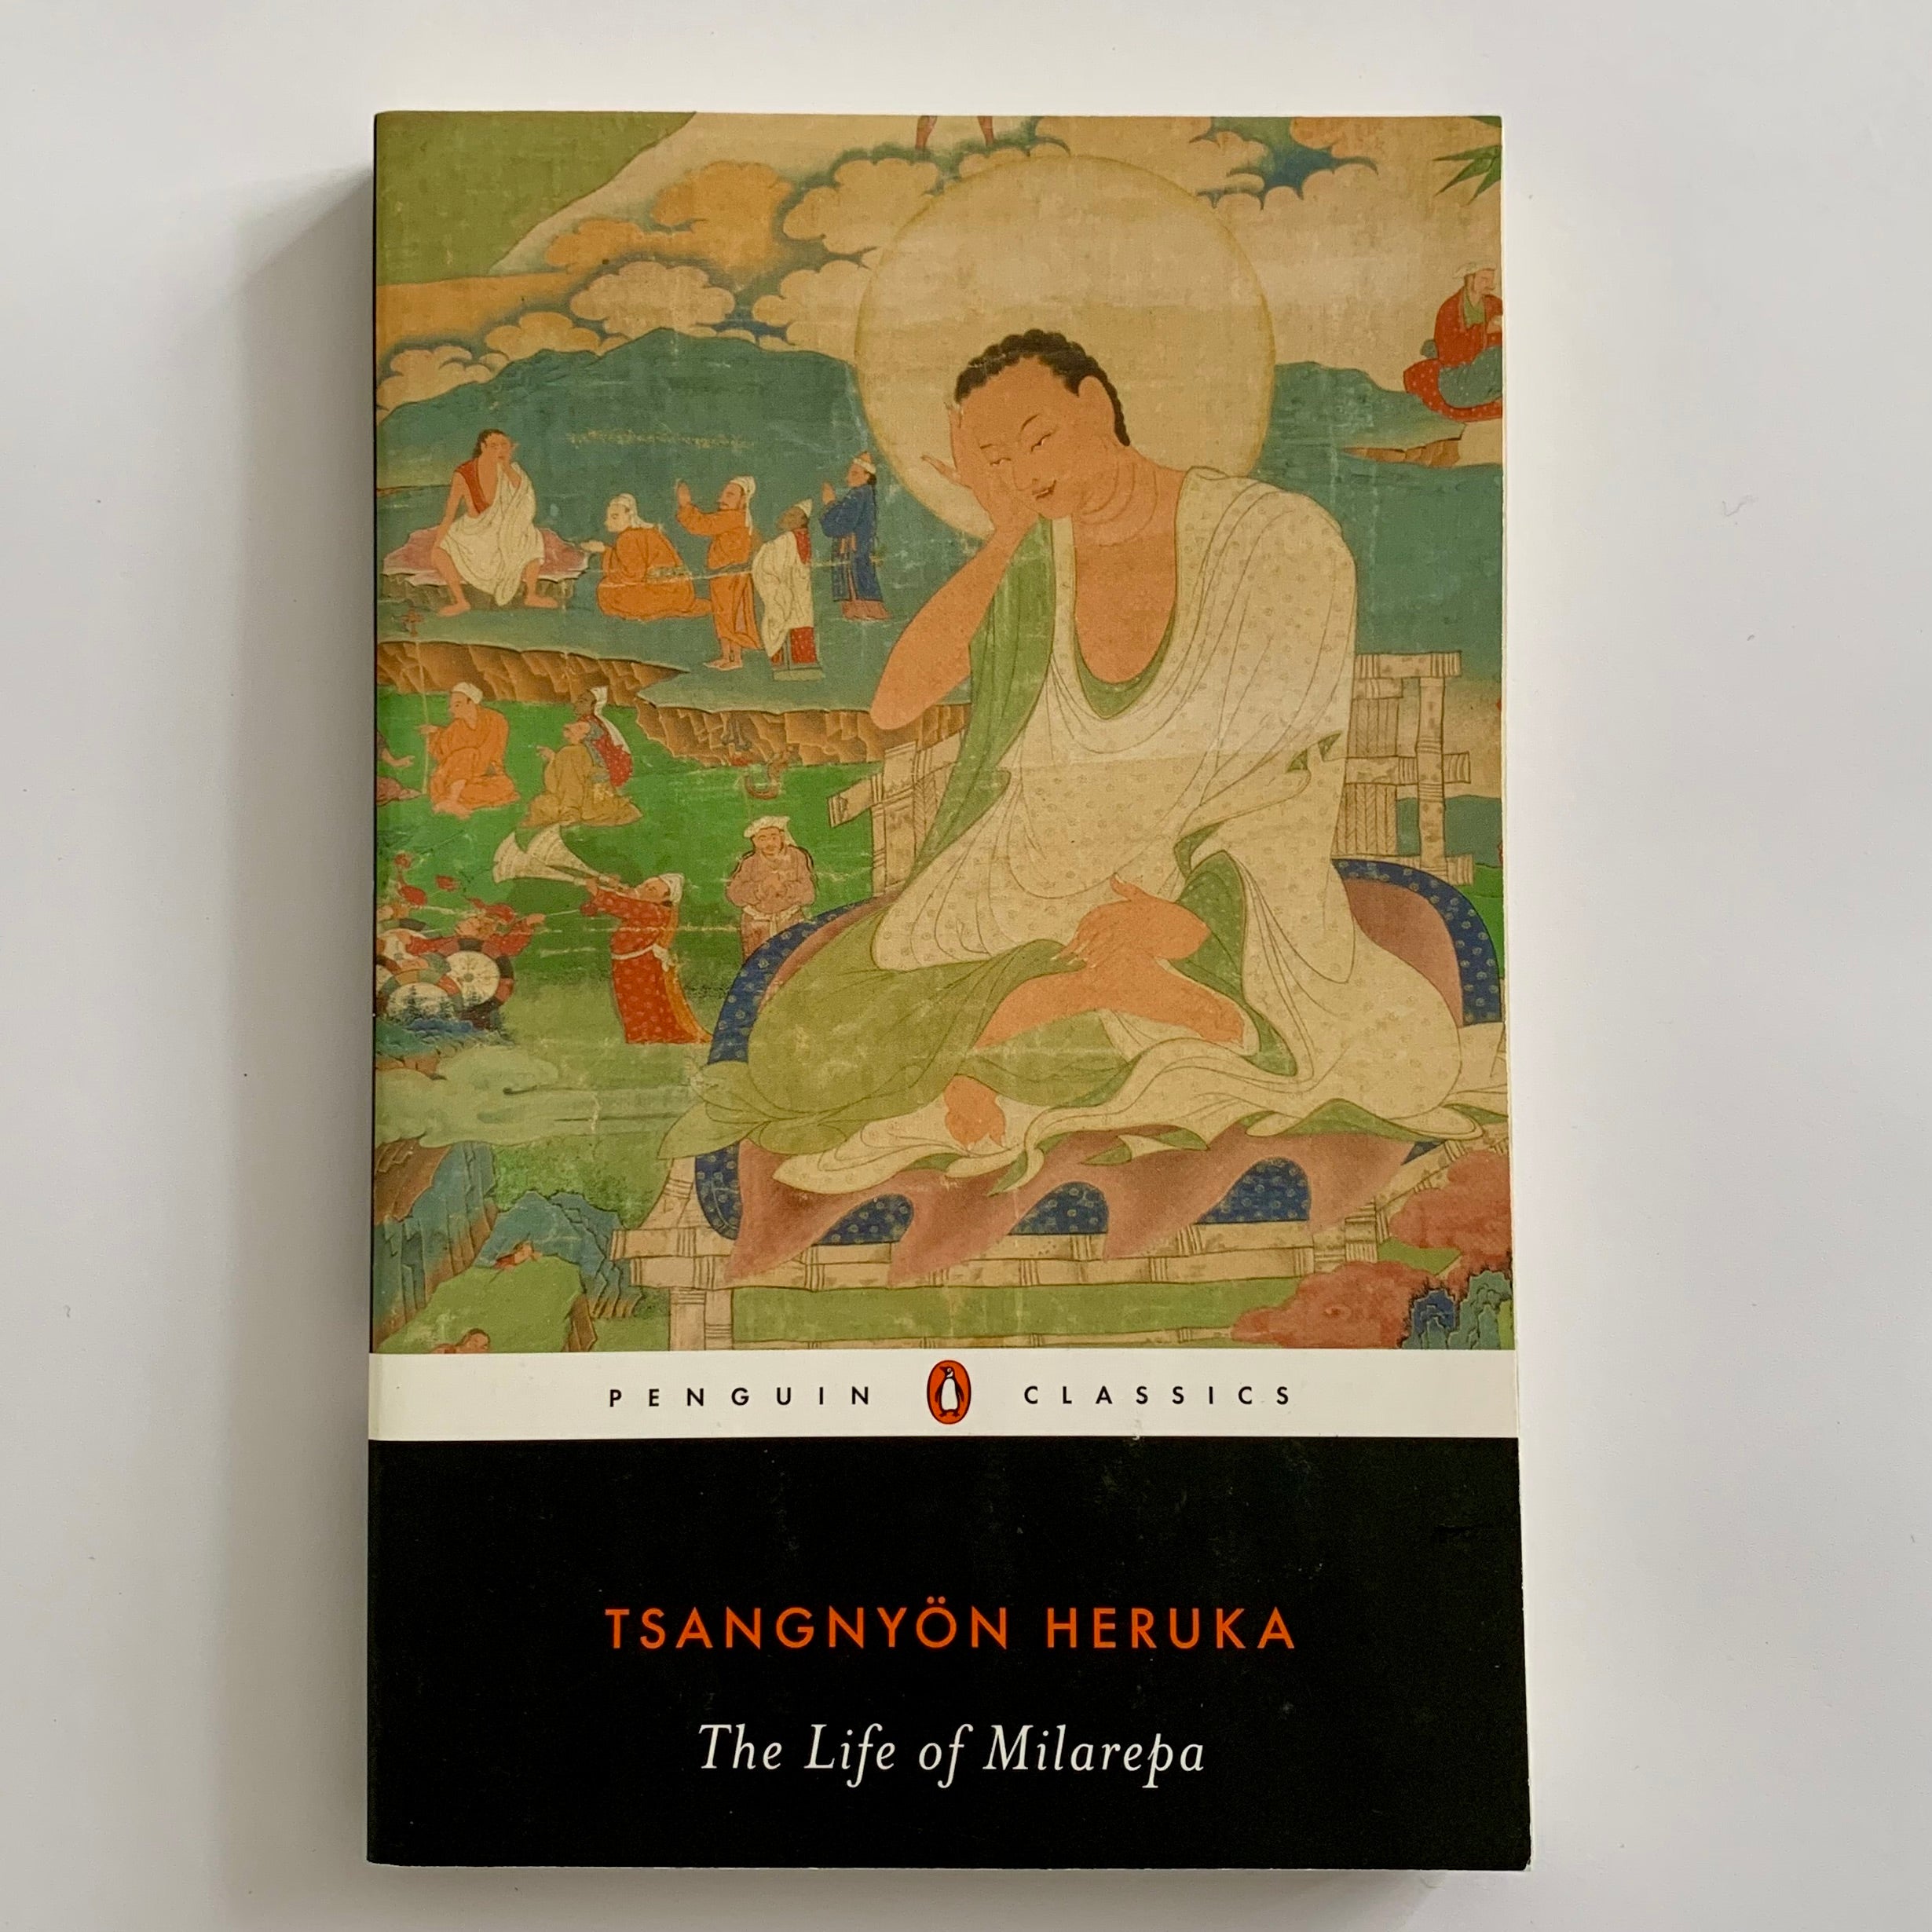 The Life of Milarepa By: Tsangnyon Heruka